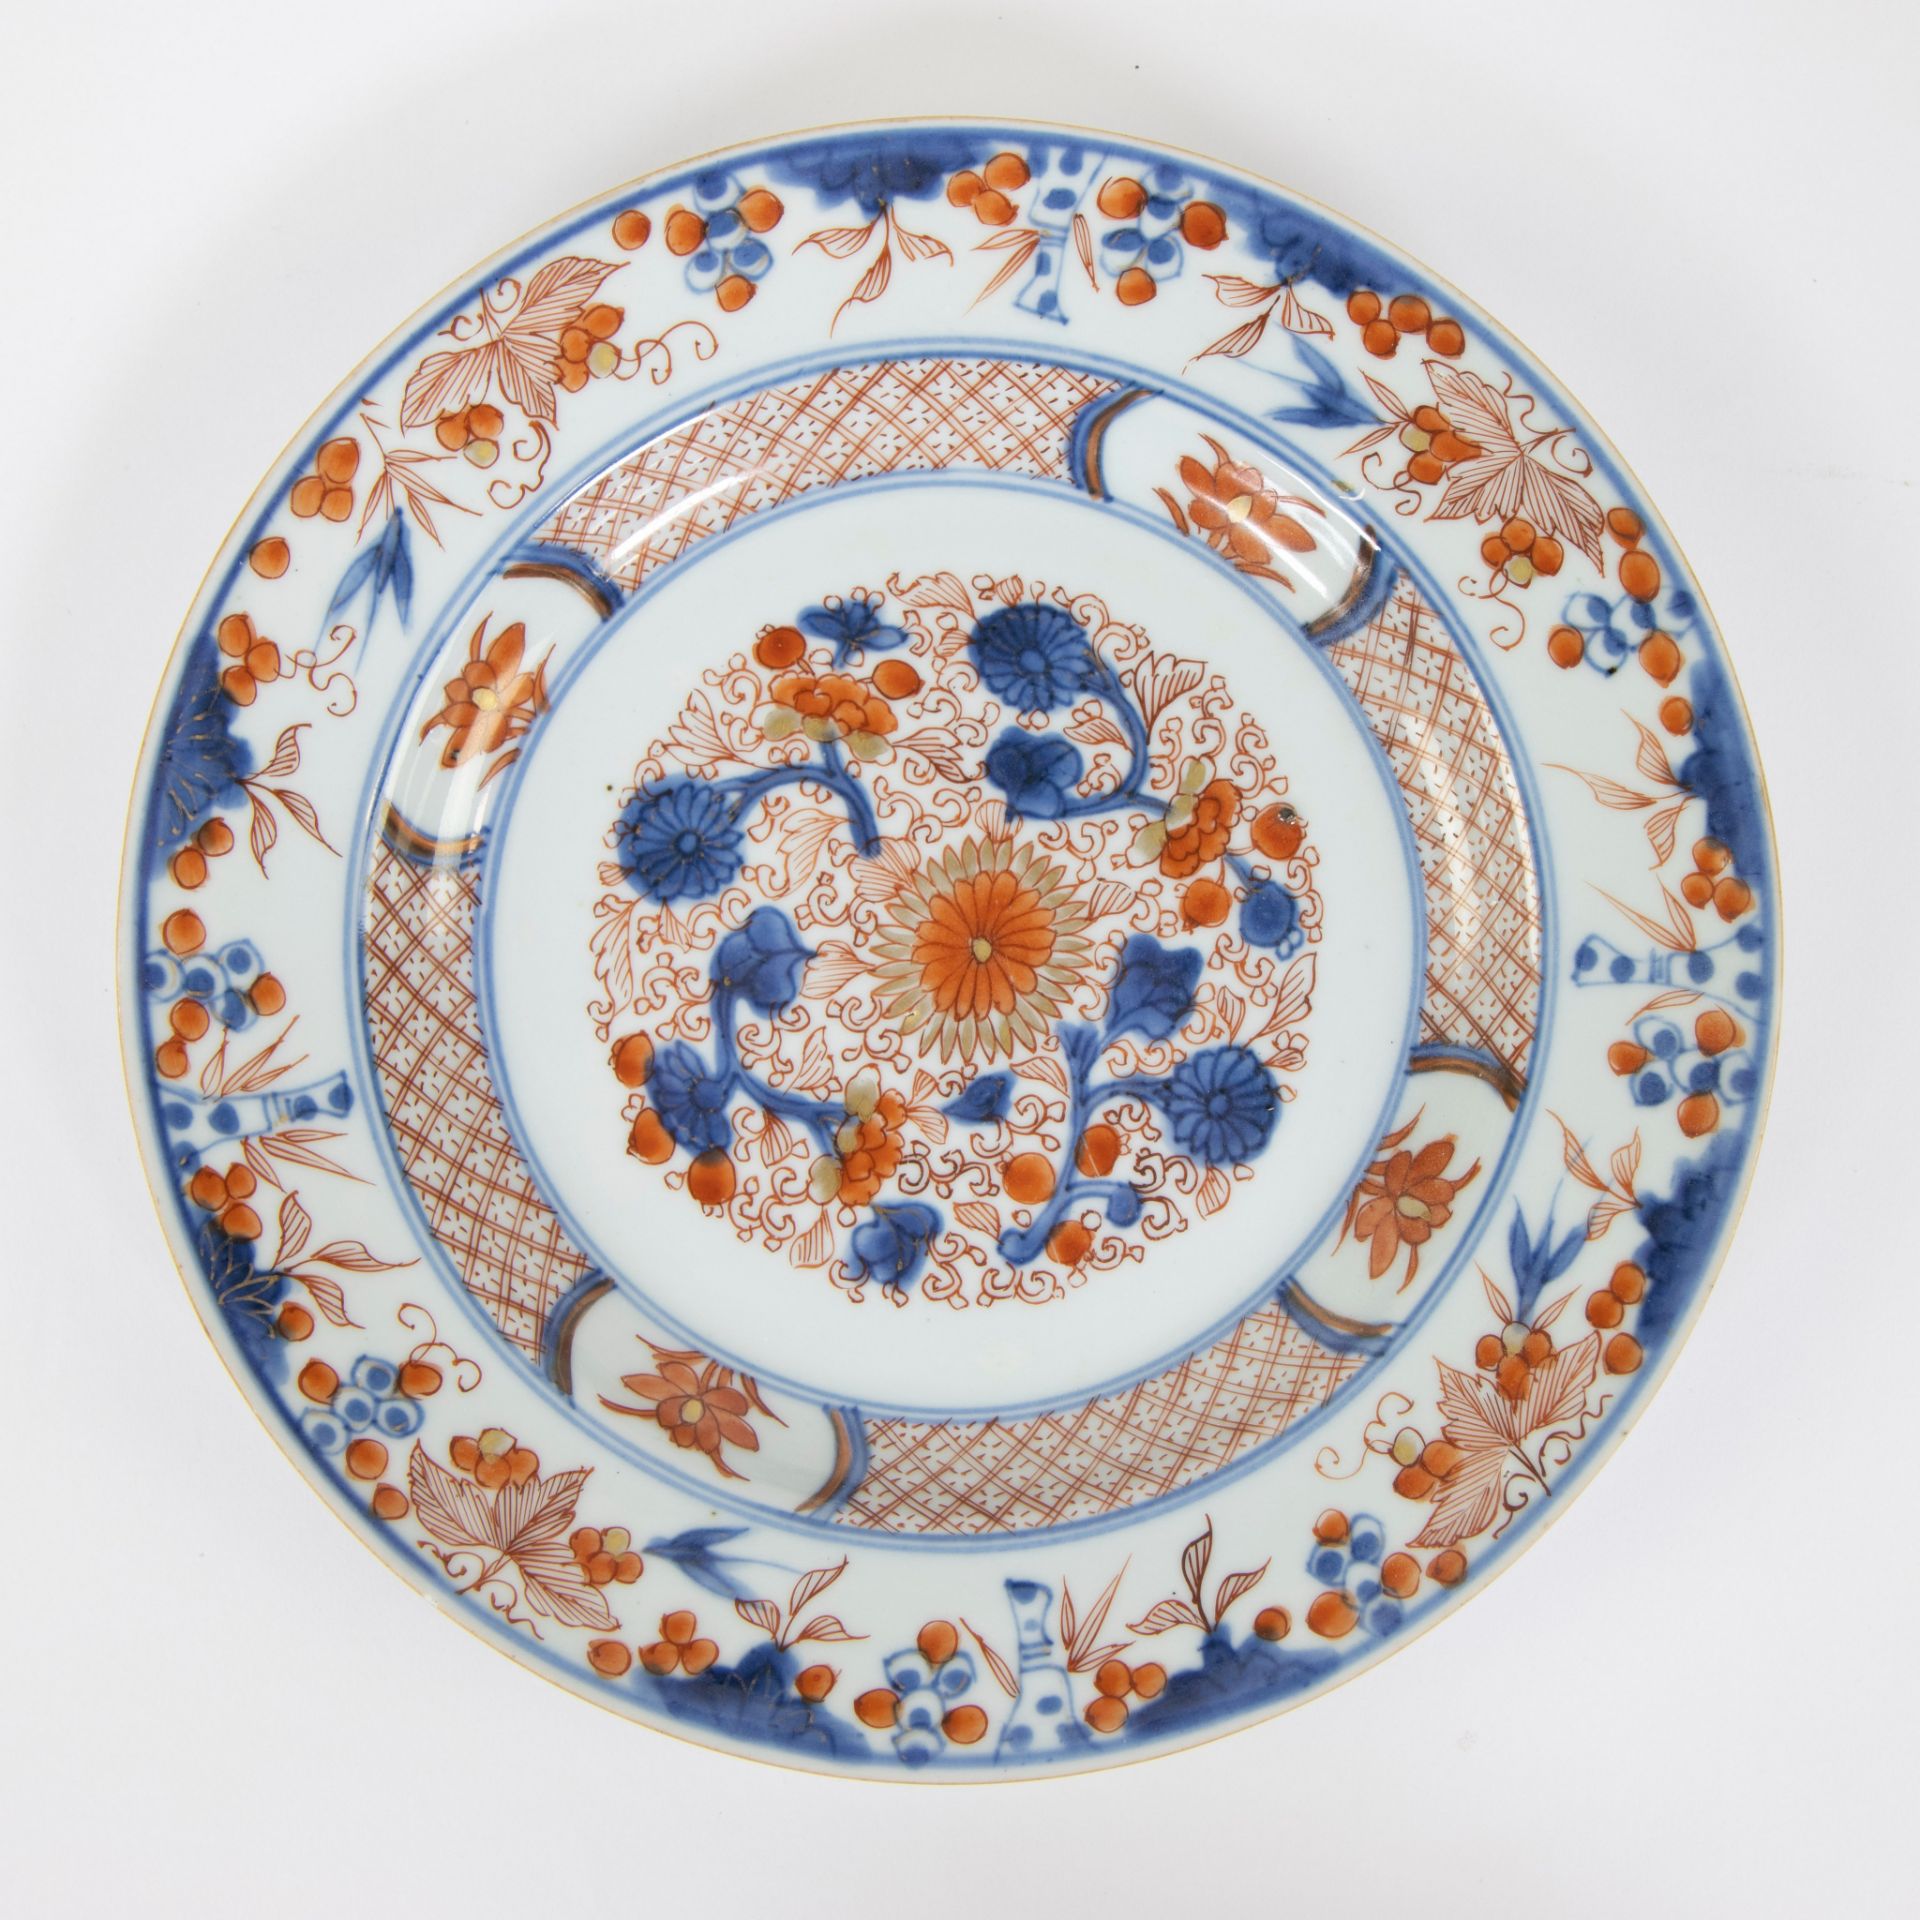 Lot 2 Chinese Imari plates 18th century - Image 6 of 7